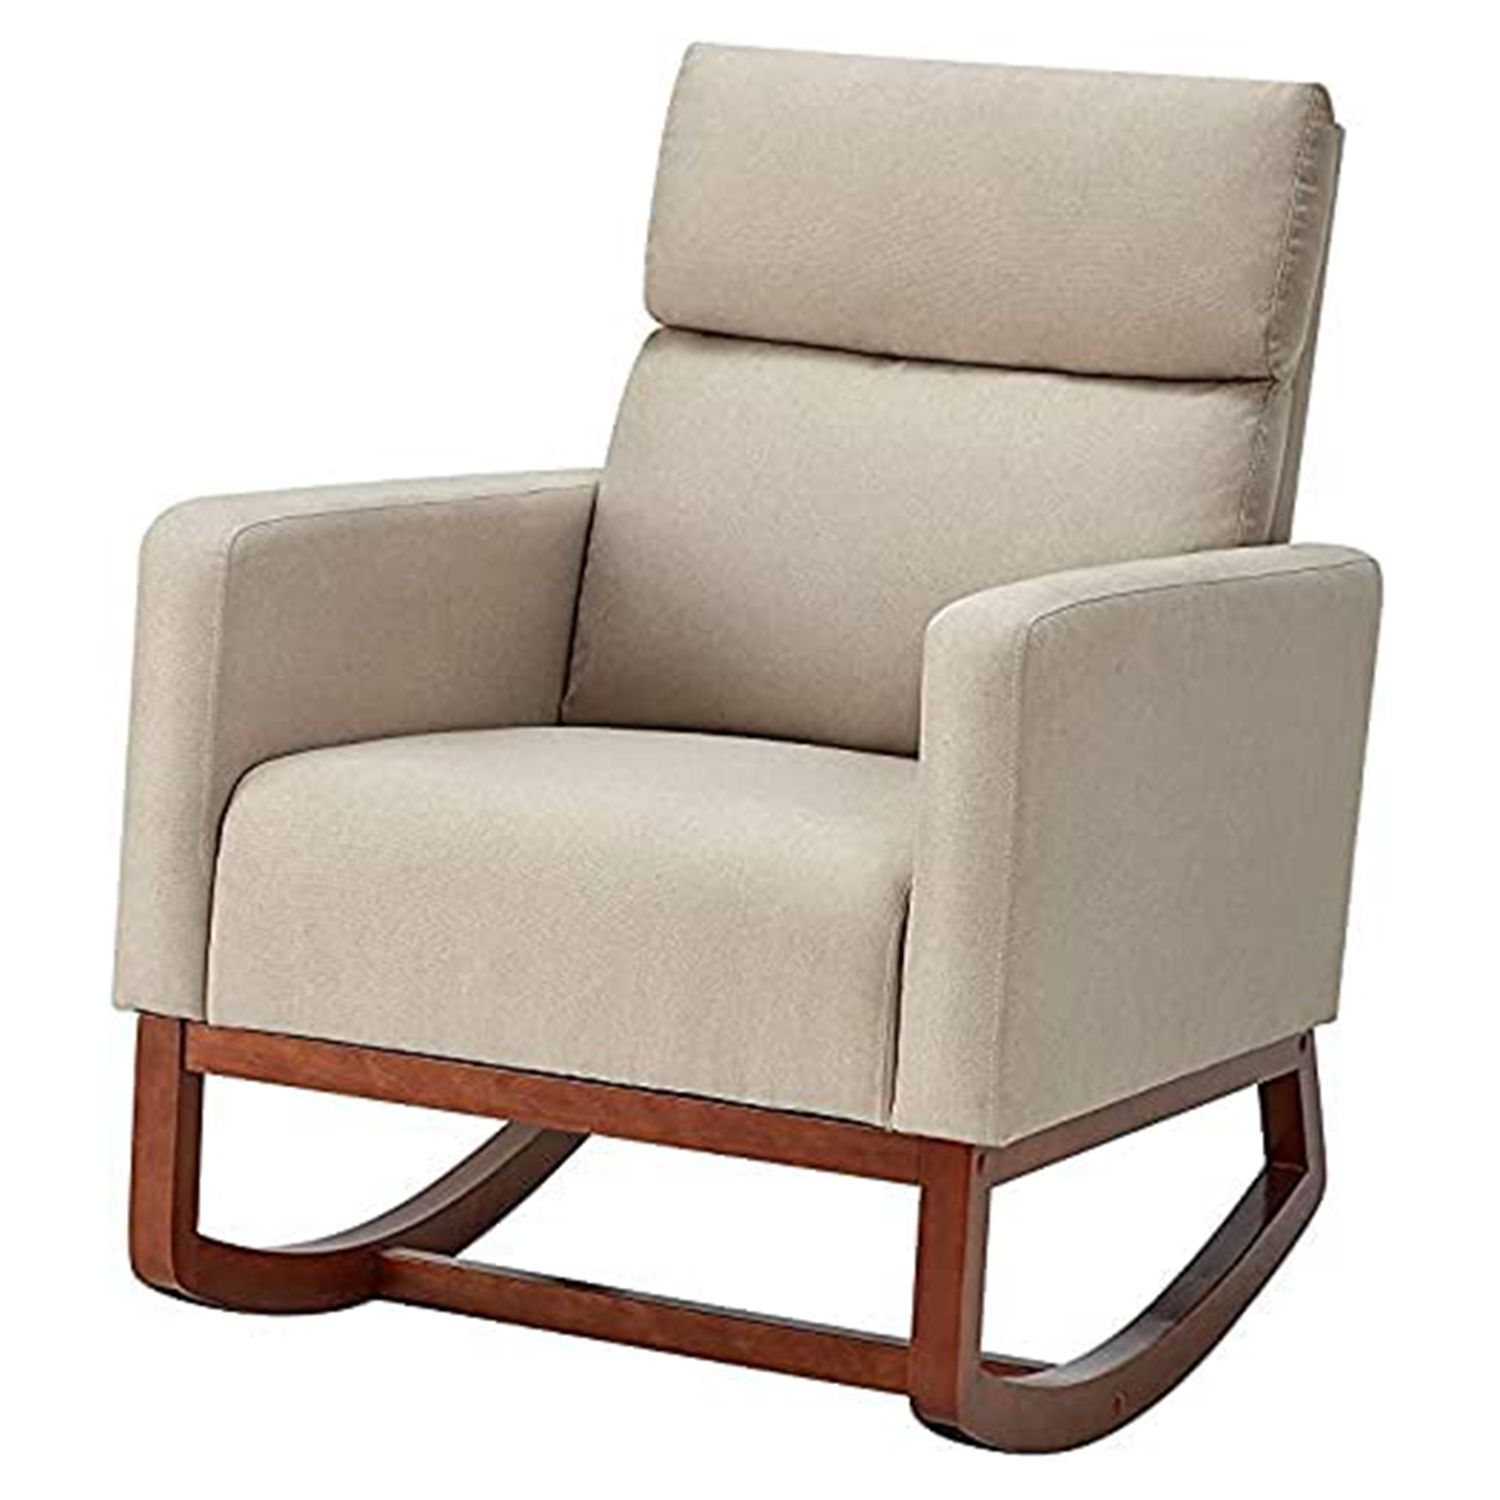 Amazon bútor székek